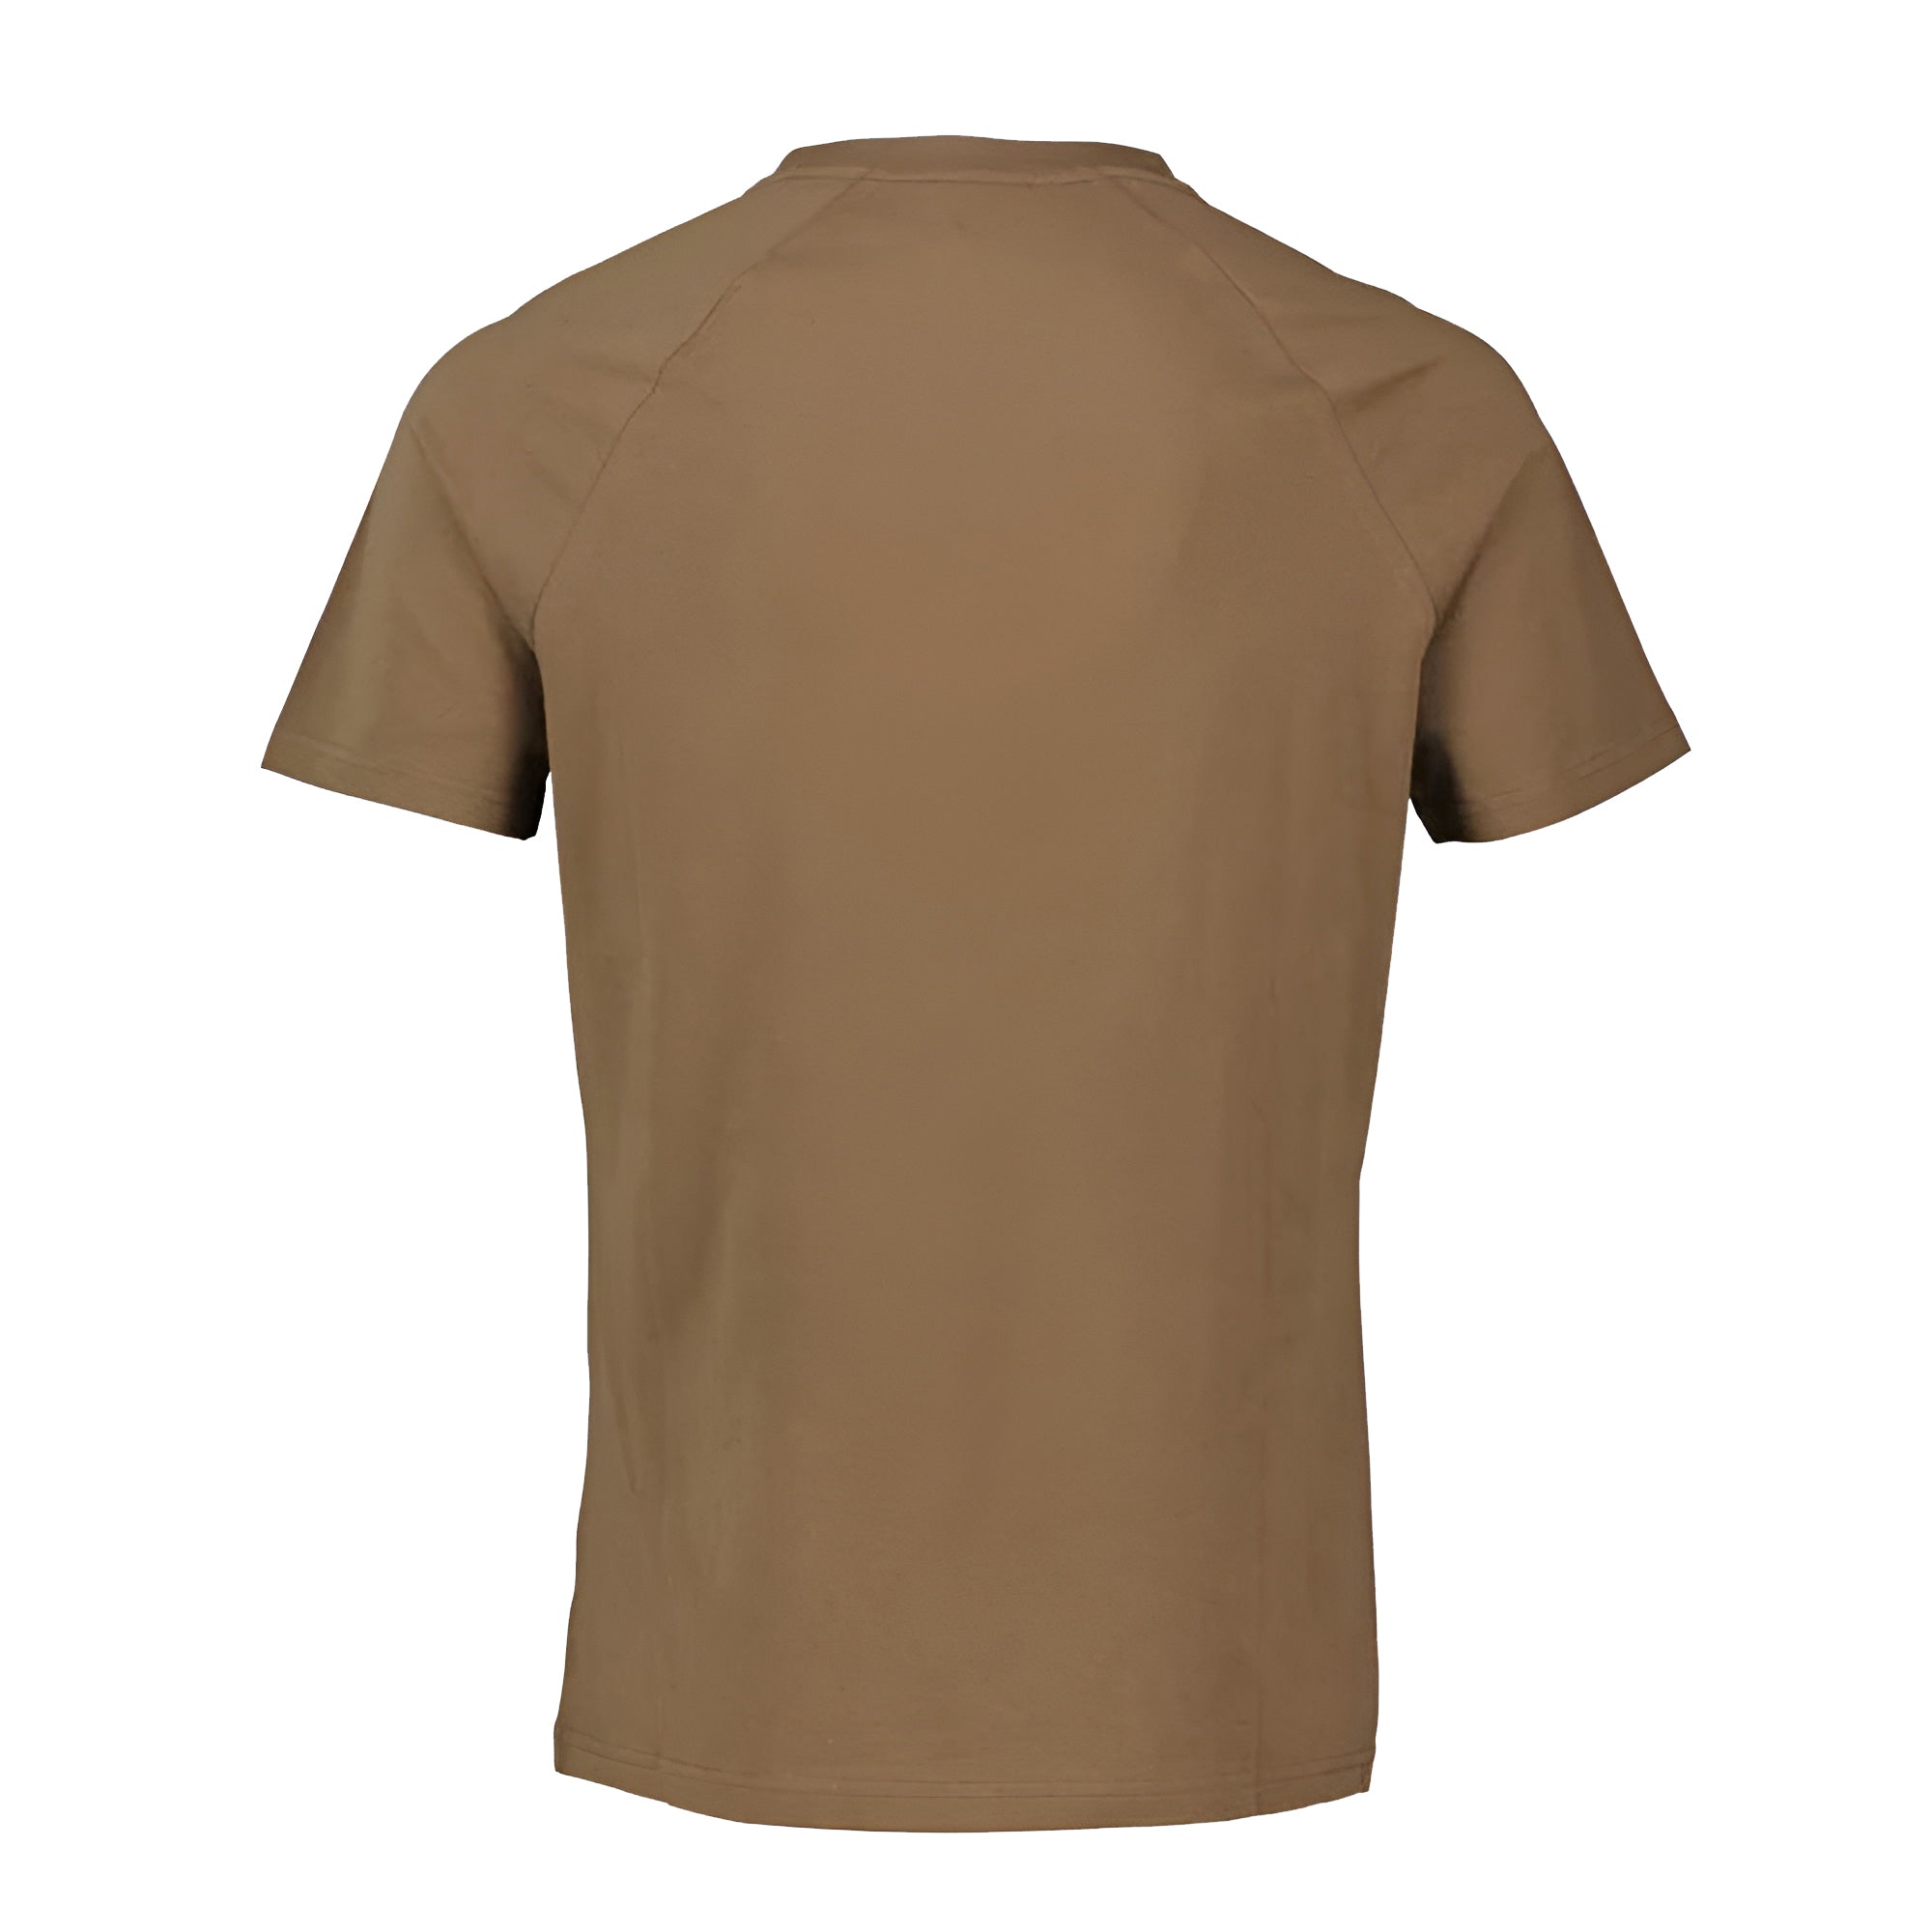 Hugo Boss Mens Slim Fit T-shirt With SPF 50+ Uv Protection Green